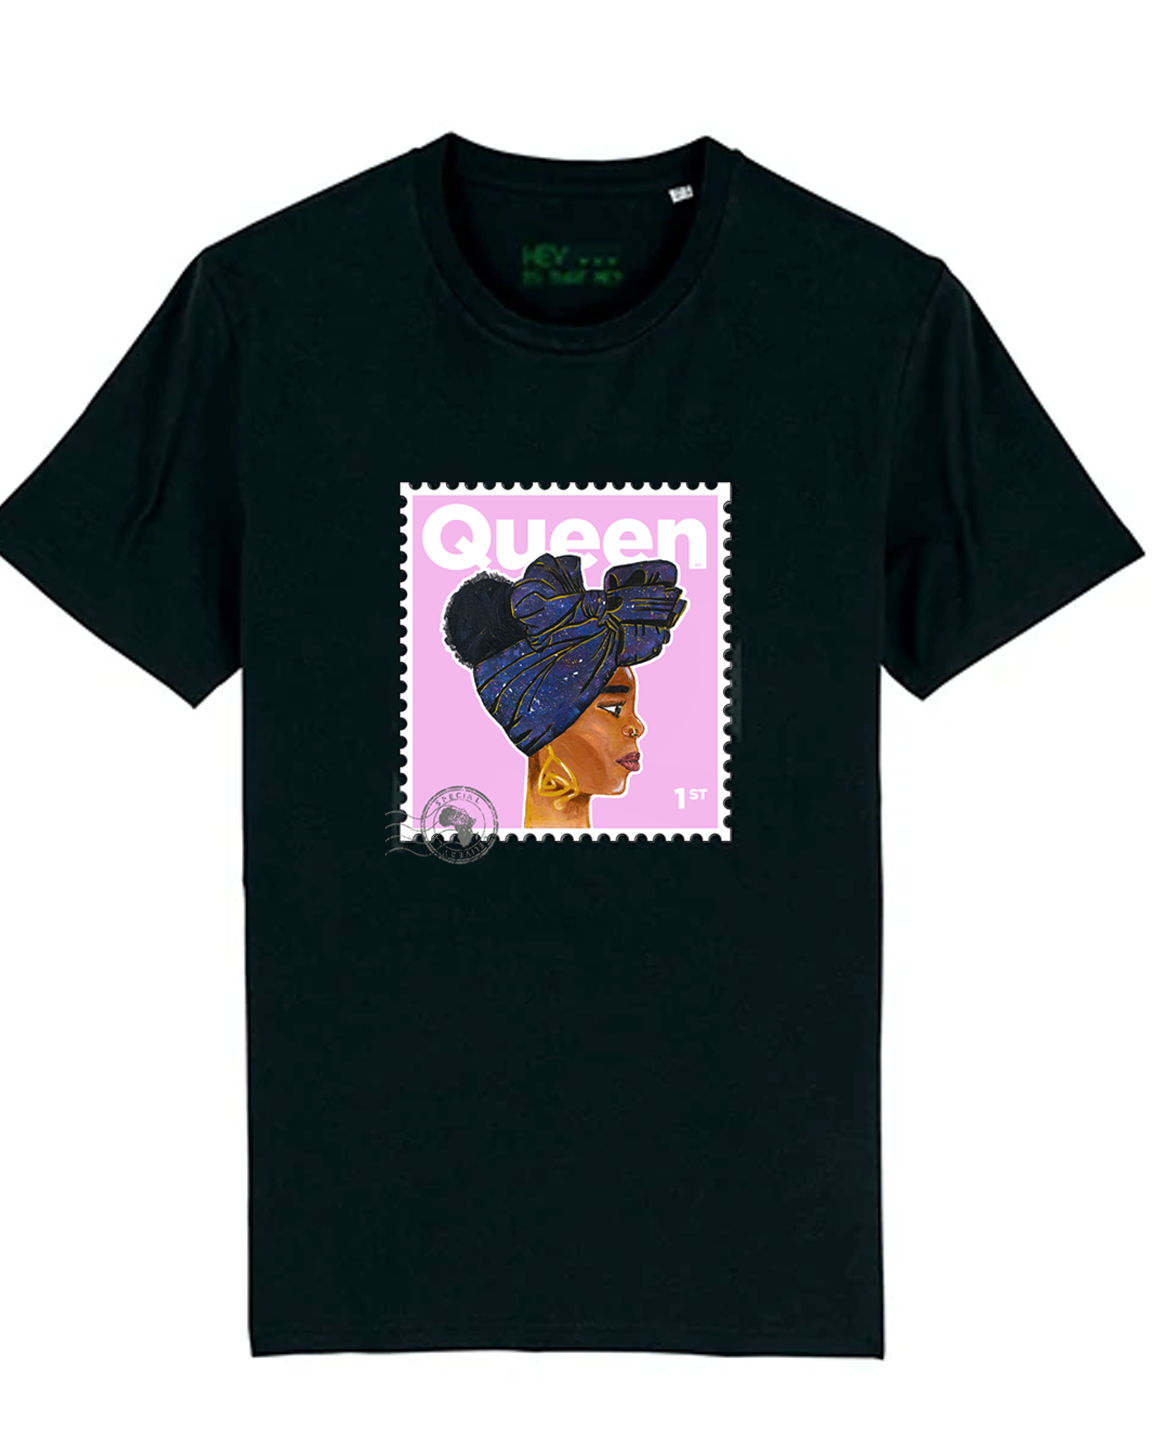 "Queen Junior" Black Organic Cotton T-Shirt - Pink stamp